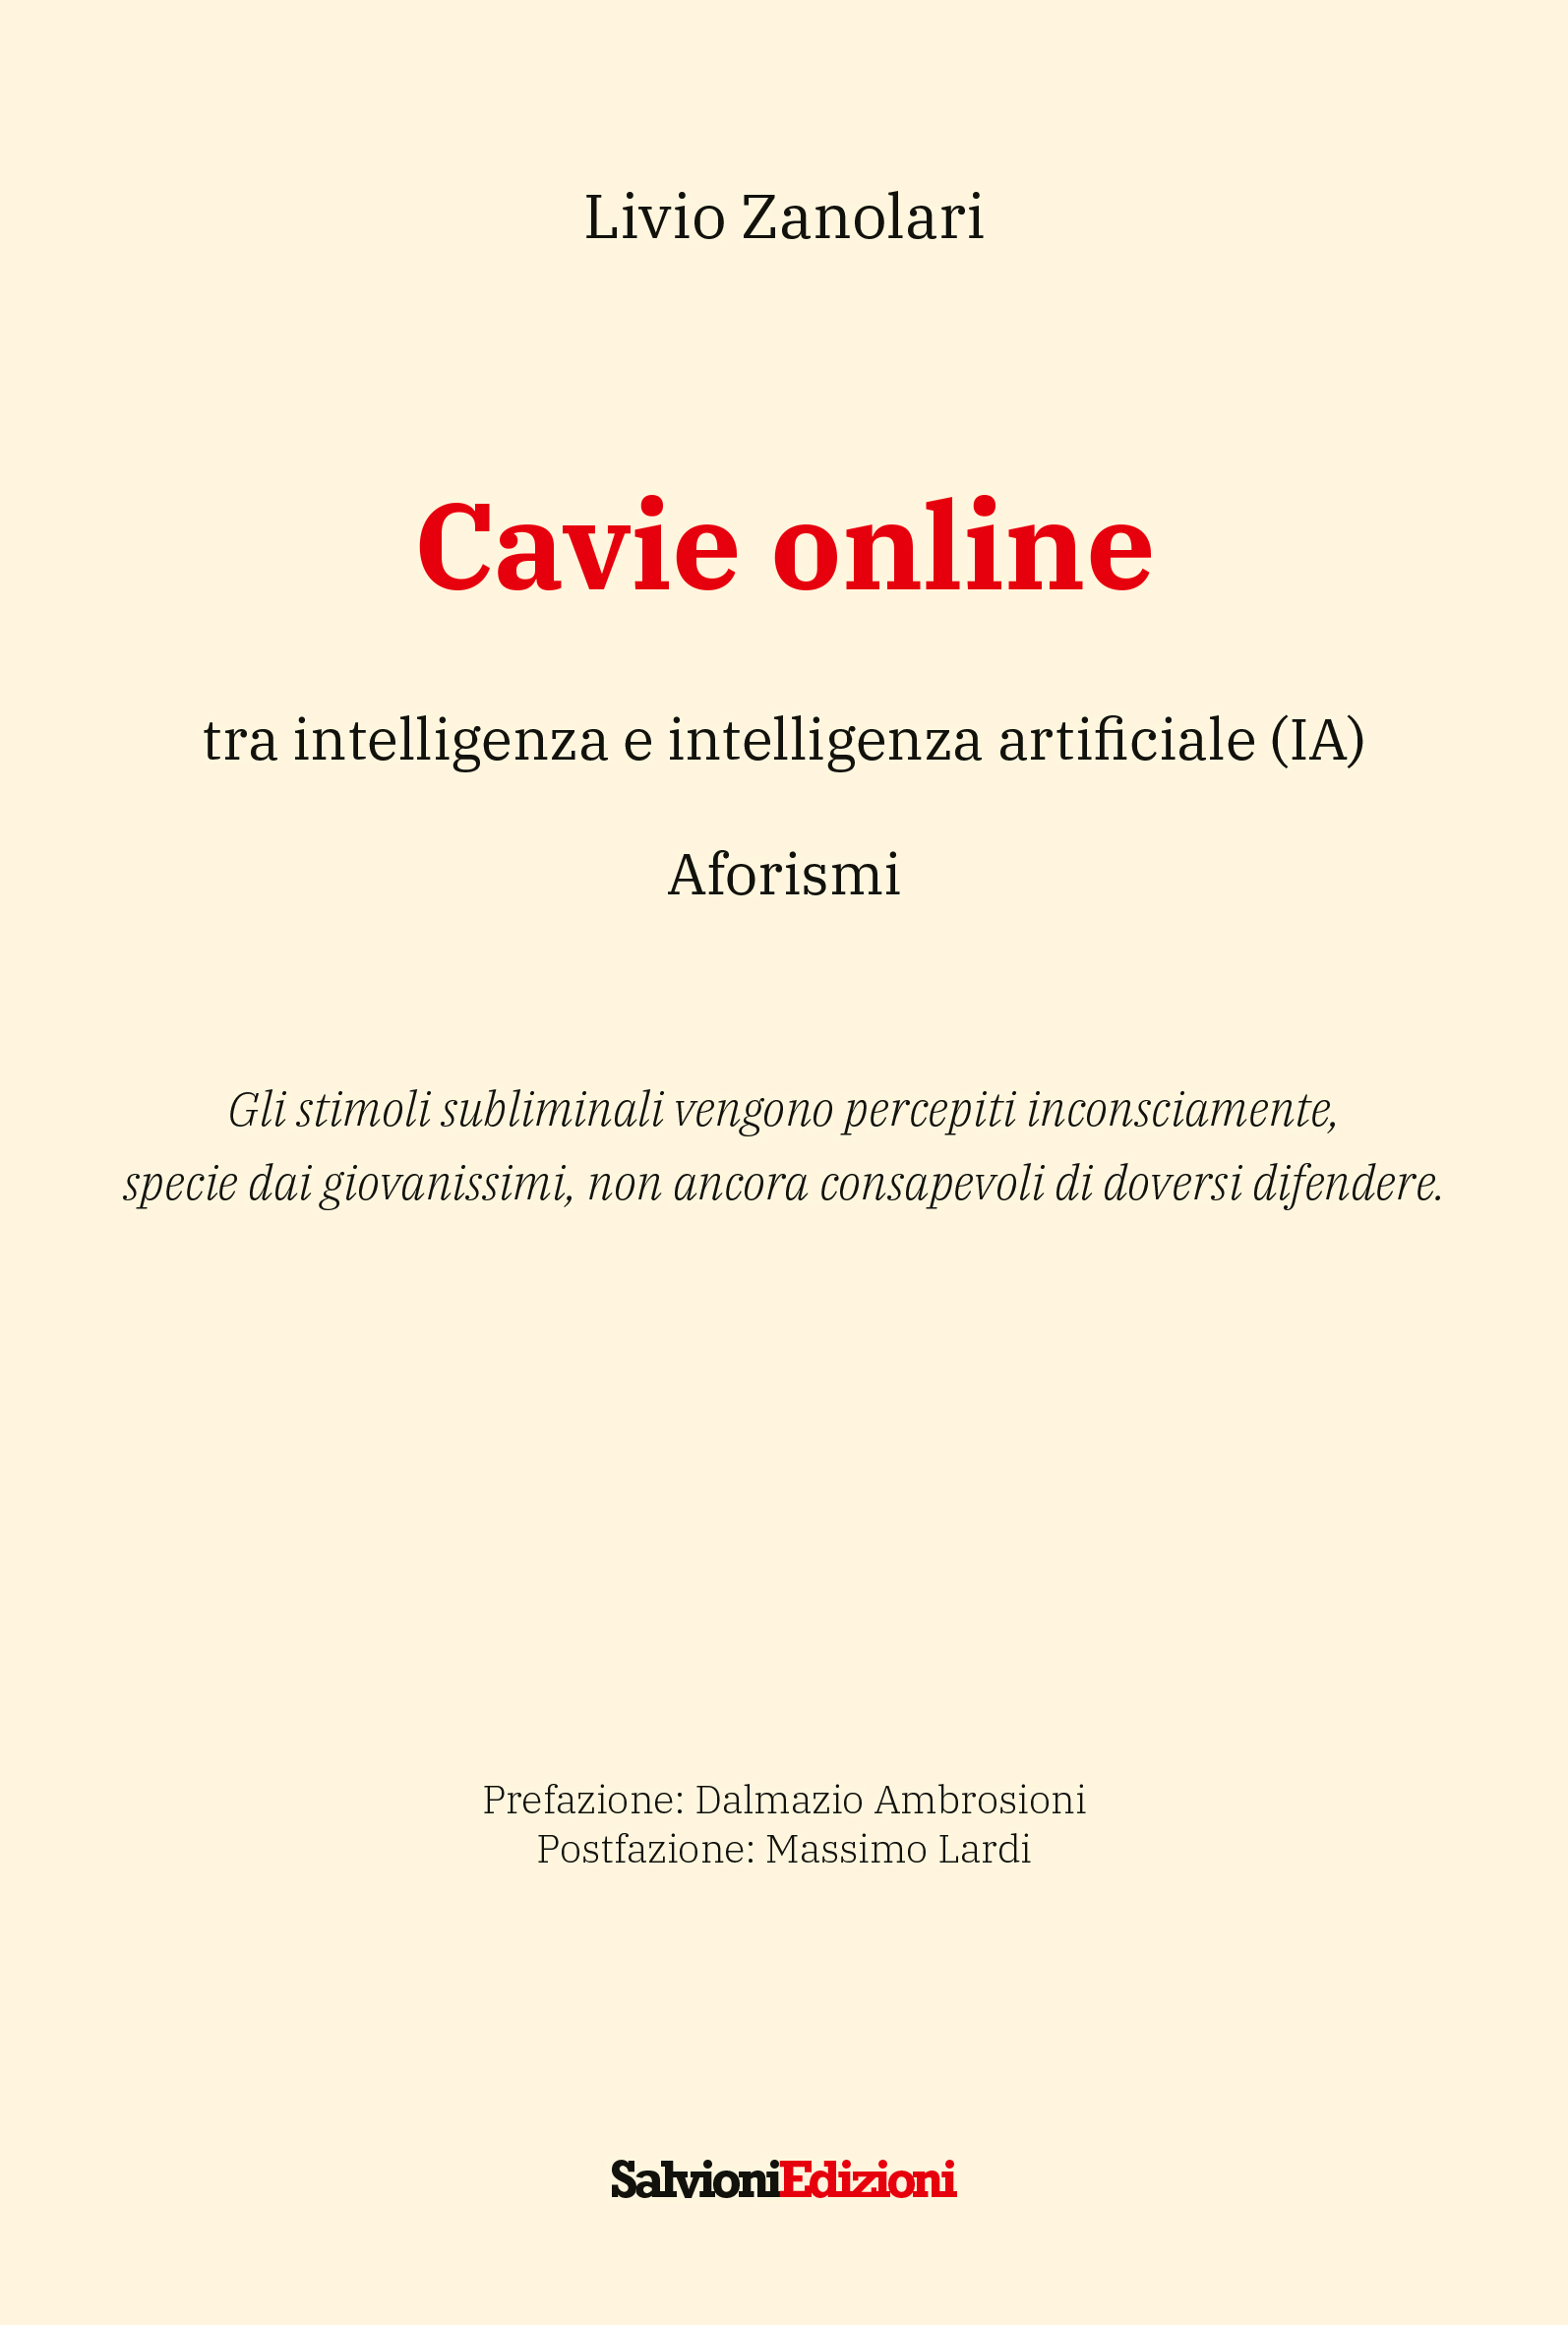 Cavie online_Copertina_fronte_SITO_144dpi_RGB_1-1